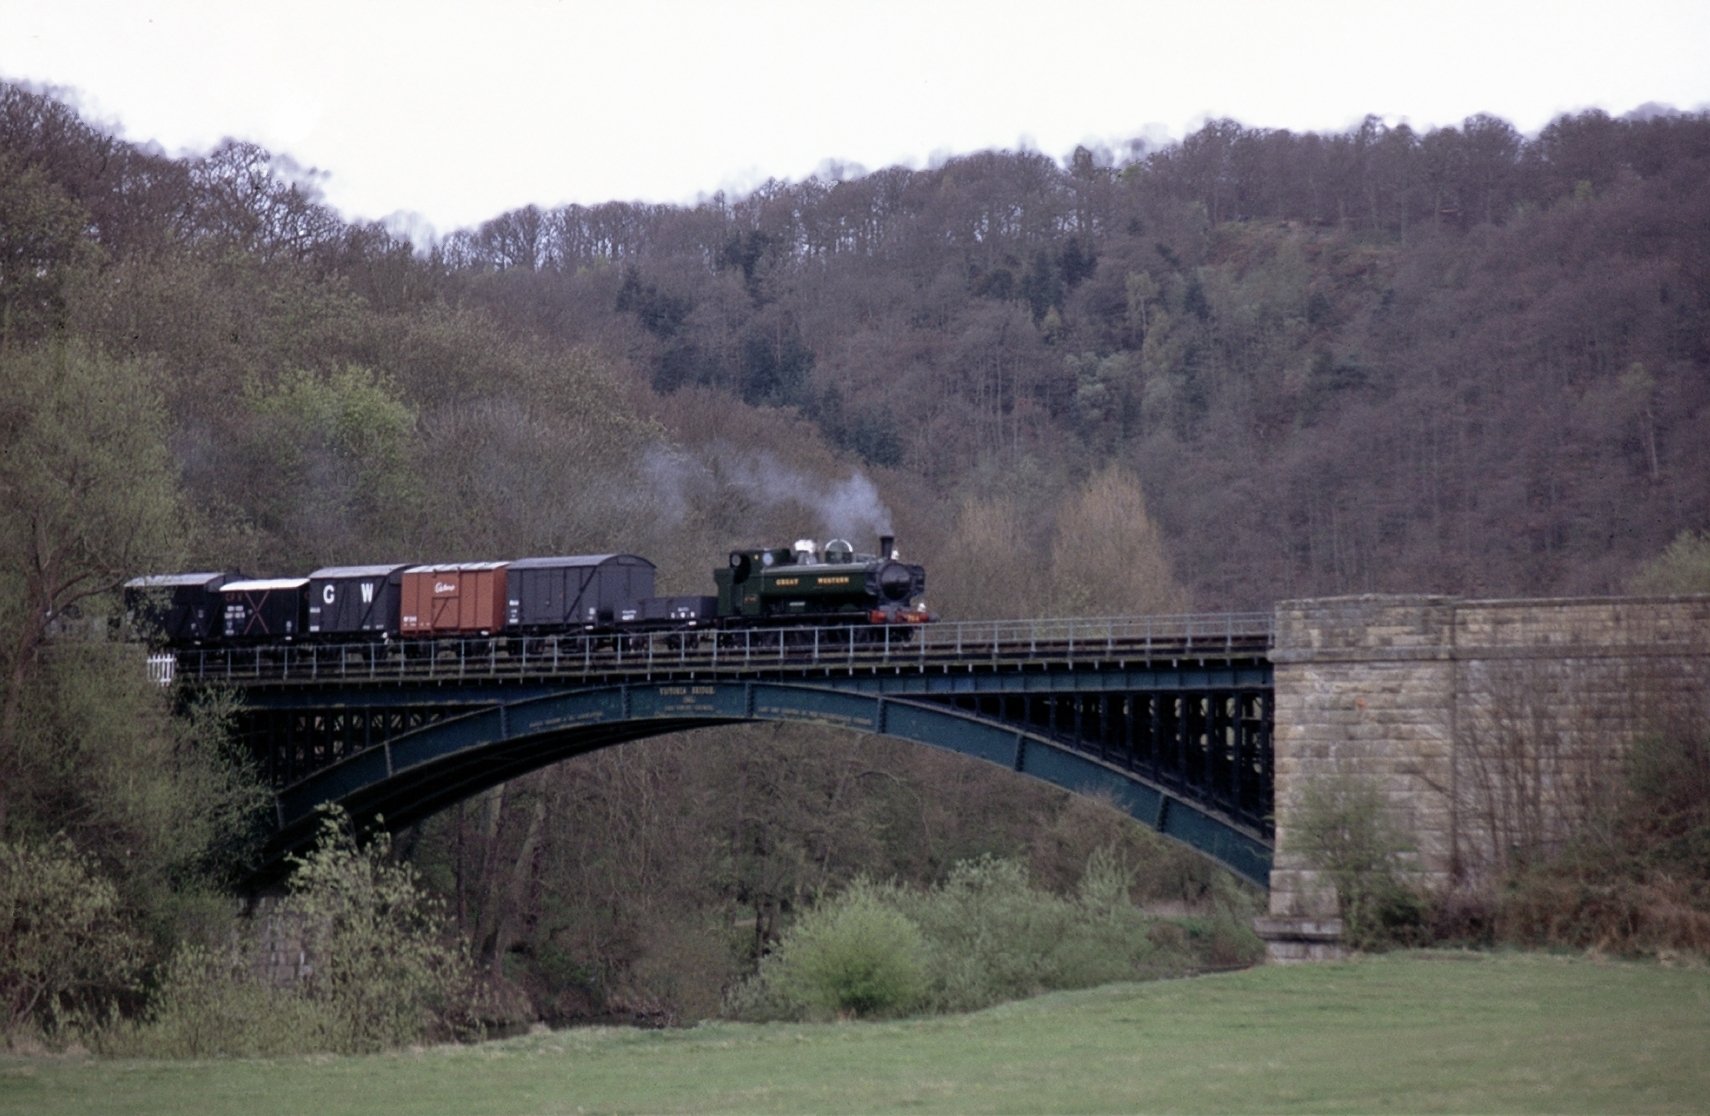 57xx_Pannier_tank_5764_crossing_the_Victoria_Bridge_on_The Severn Valley Railway.jpg